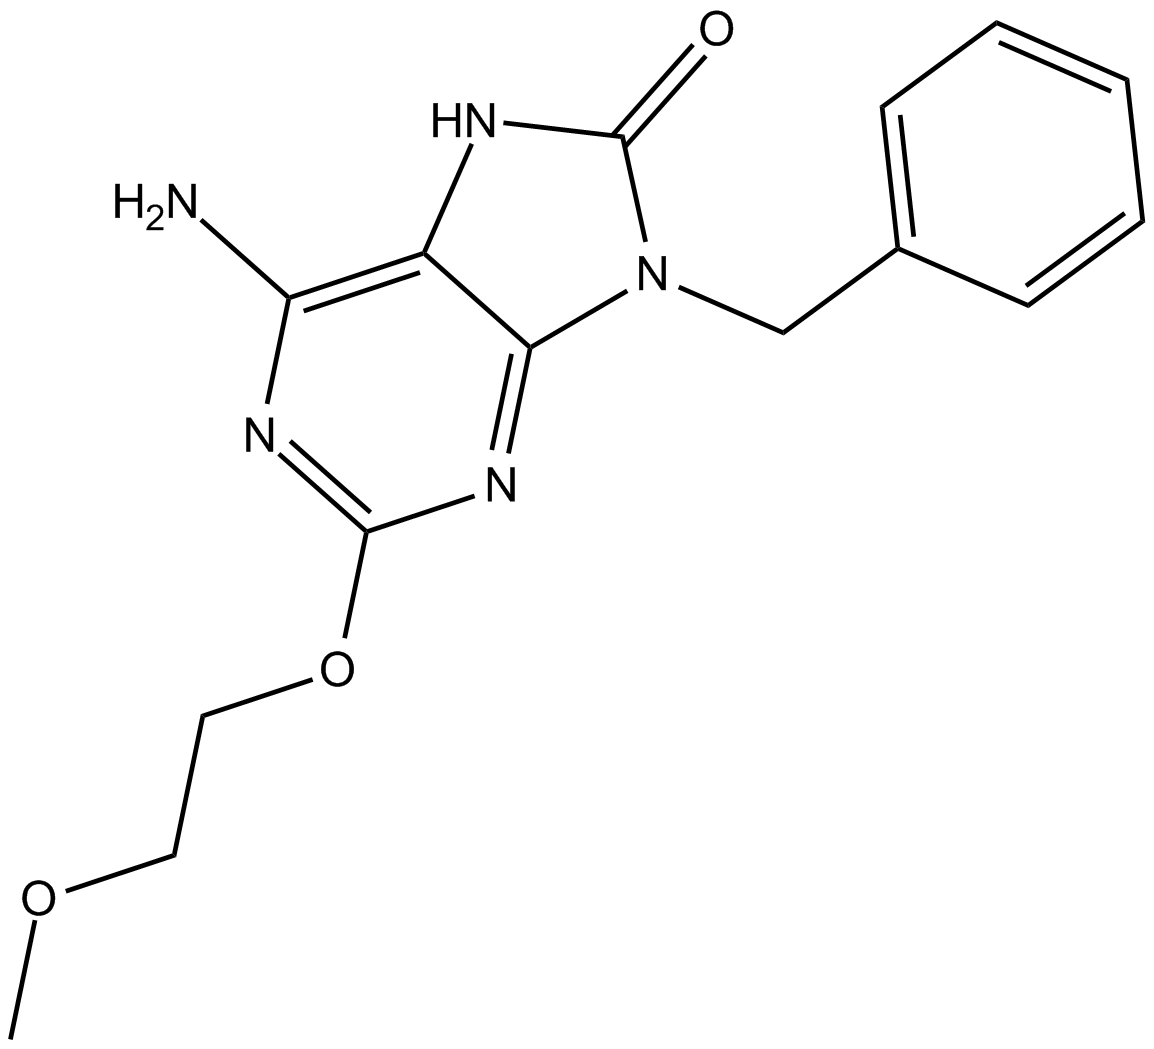 Toll-Like Receptor 7 Ligand II